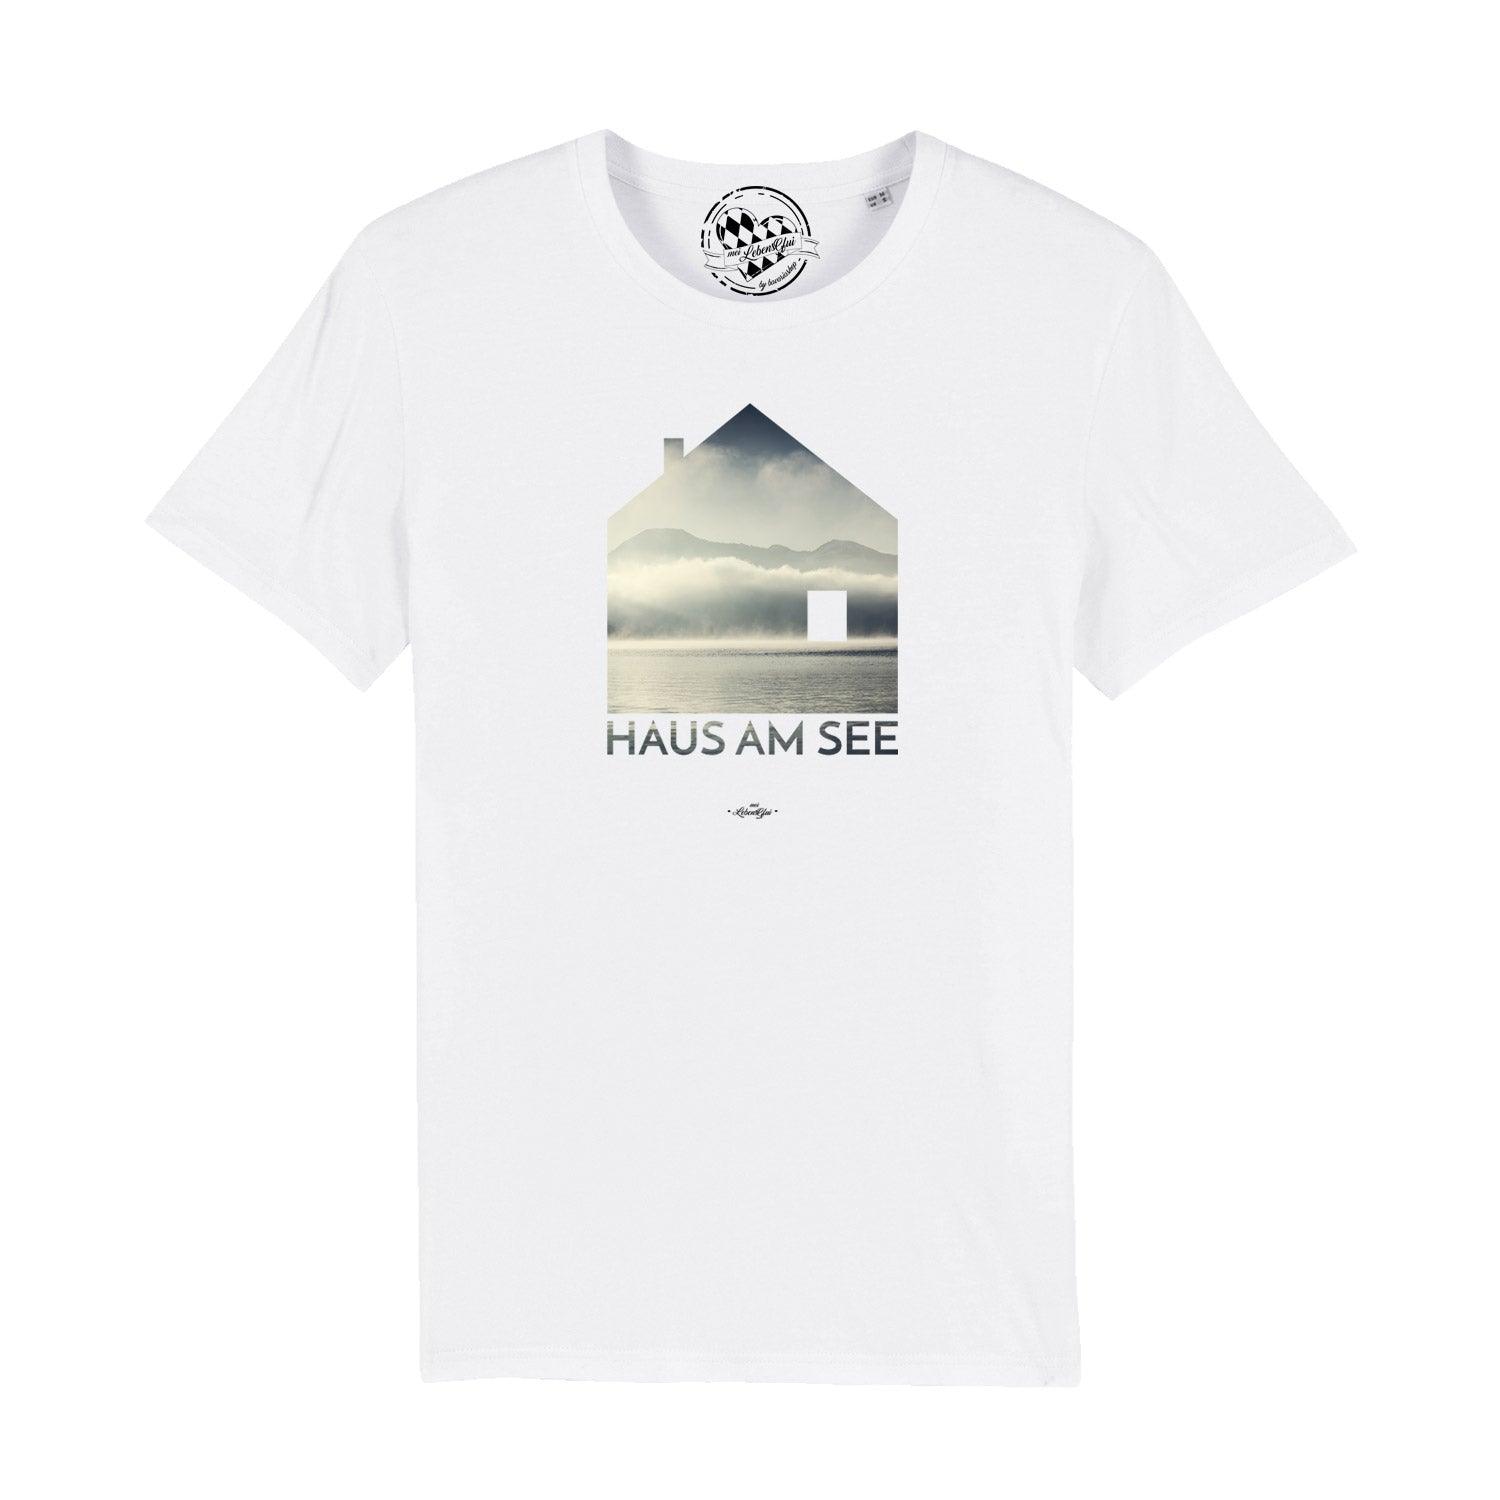 Herren T-Shirt "Haus am See" - bavariashop - mei LebensGfui